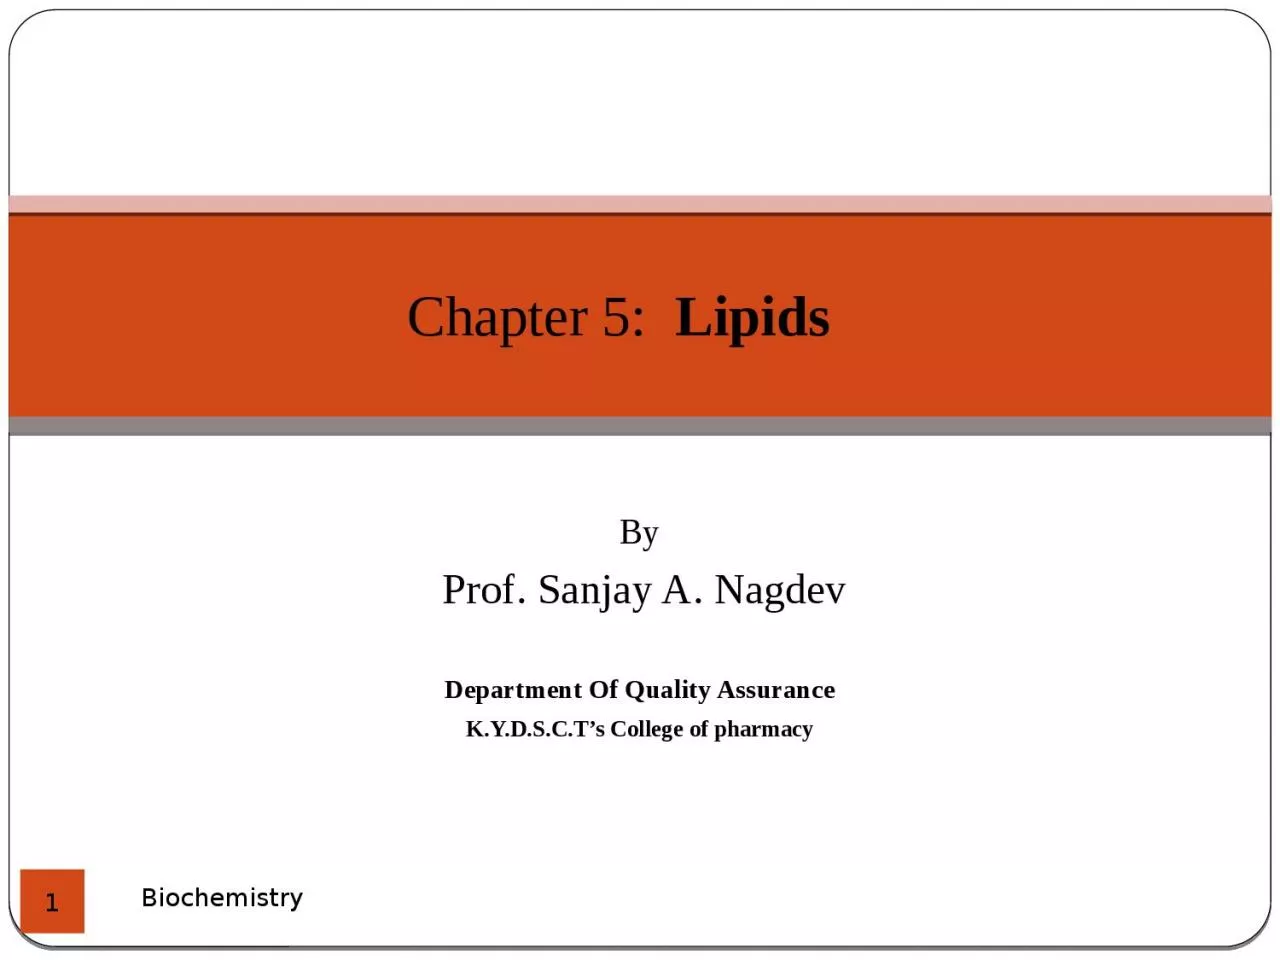 B y   Prof. Sanjay A.  Nagdev